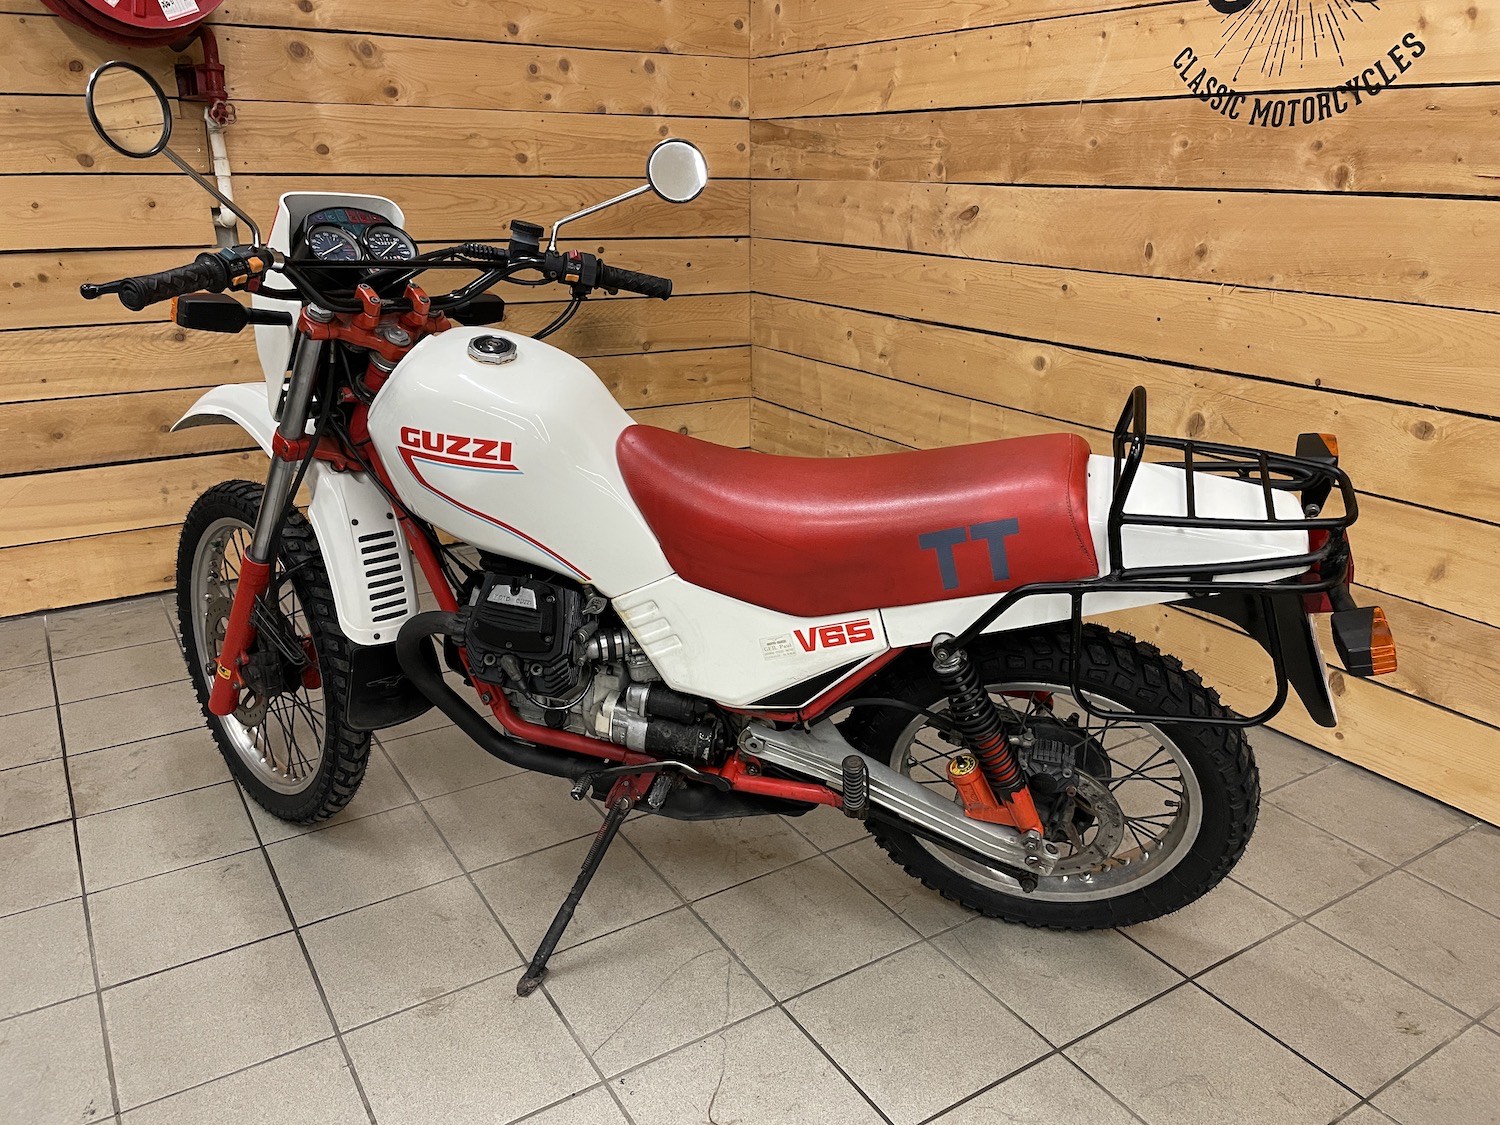 Moto_guzzi_v65tt_85_cezanne_classic_motorcycle-98.jpg